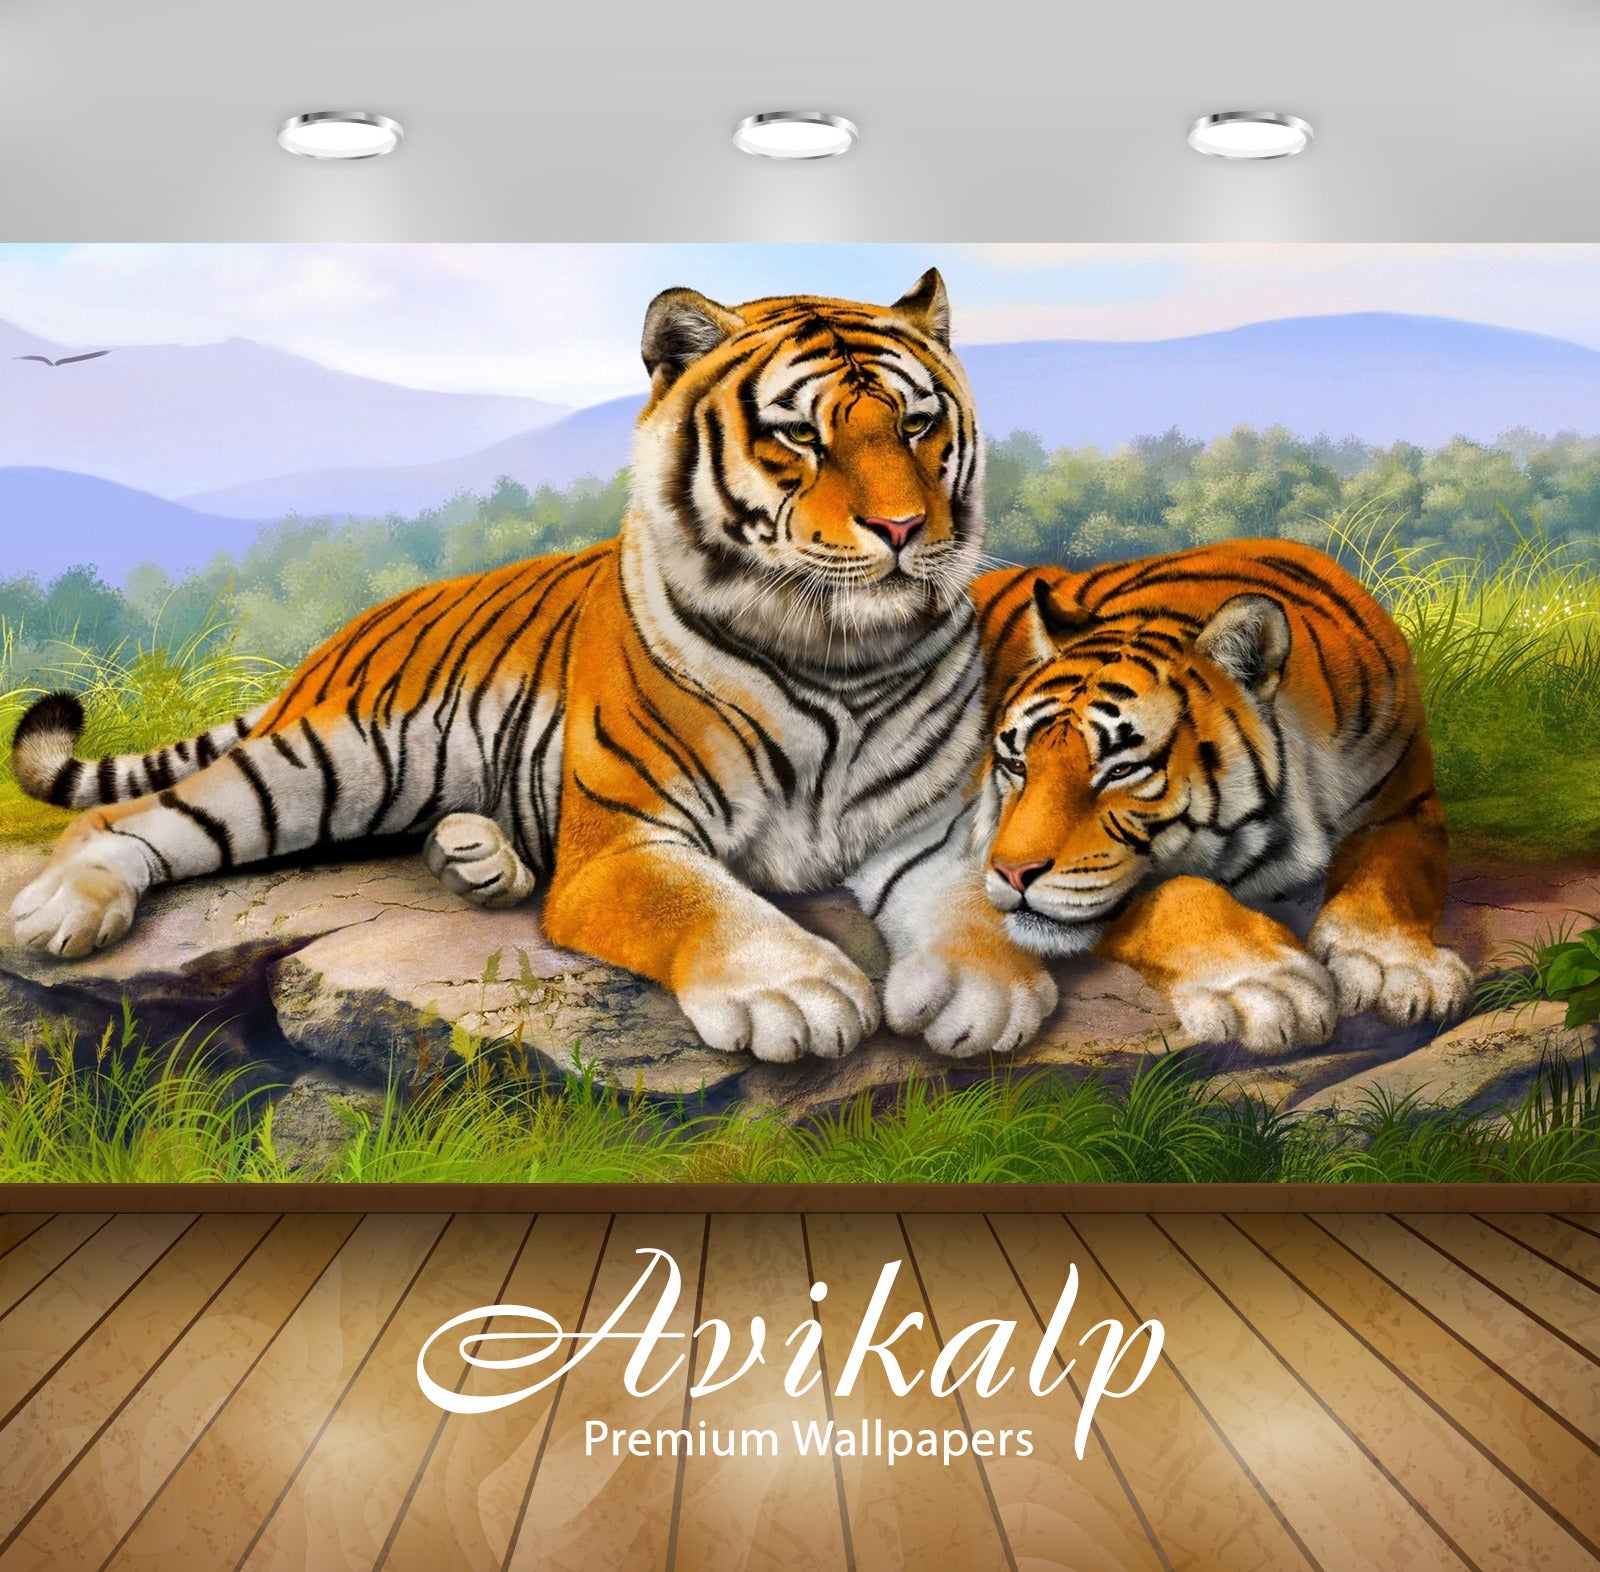 Avikalp Exclusive Awi2157 Tiger Couple Full HD Wallpapers for Living r –  Avikalp International - 3D Wallpapers